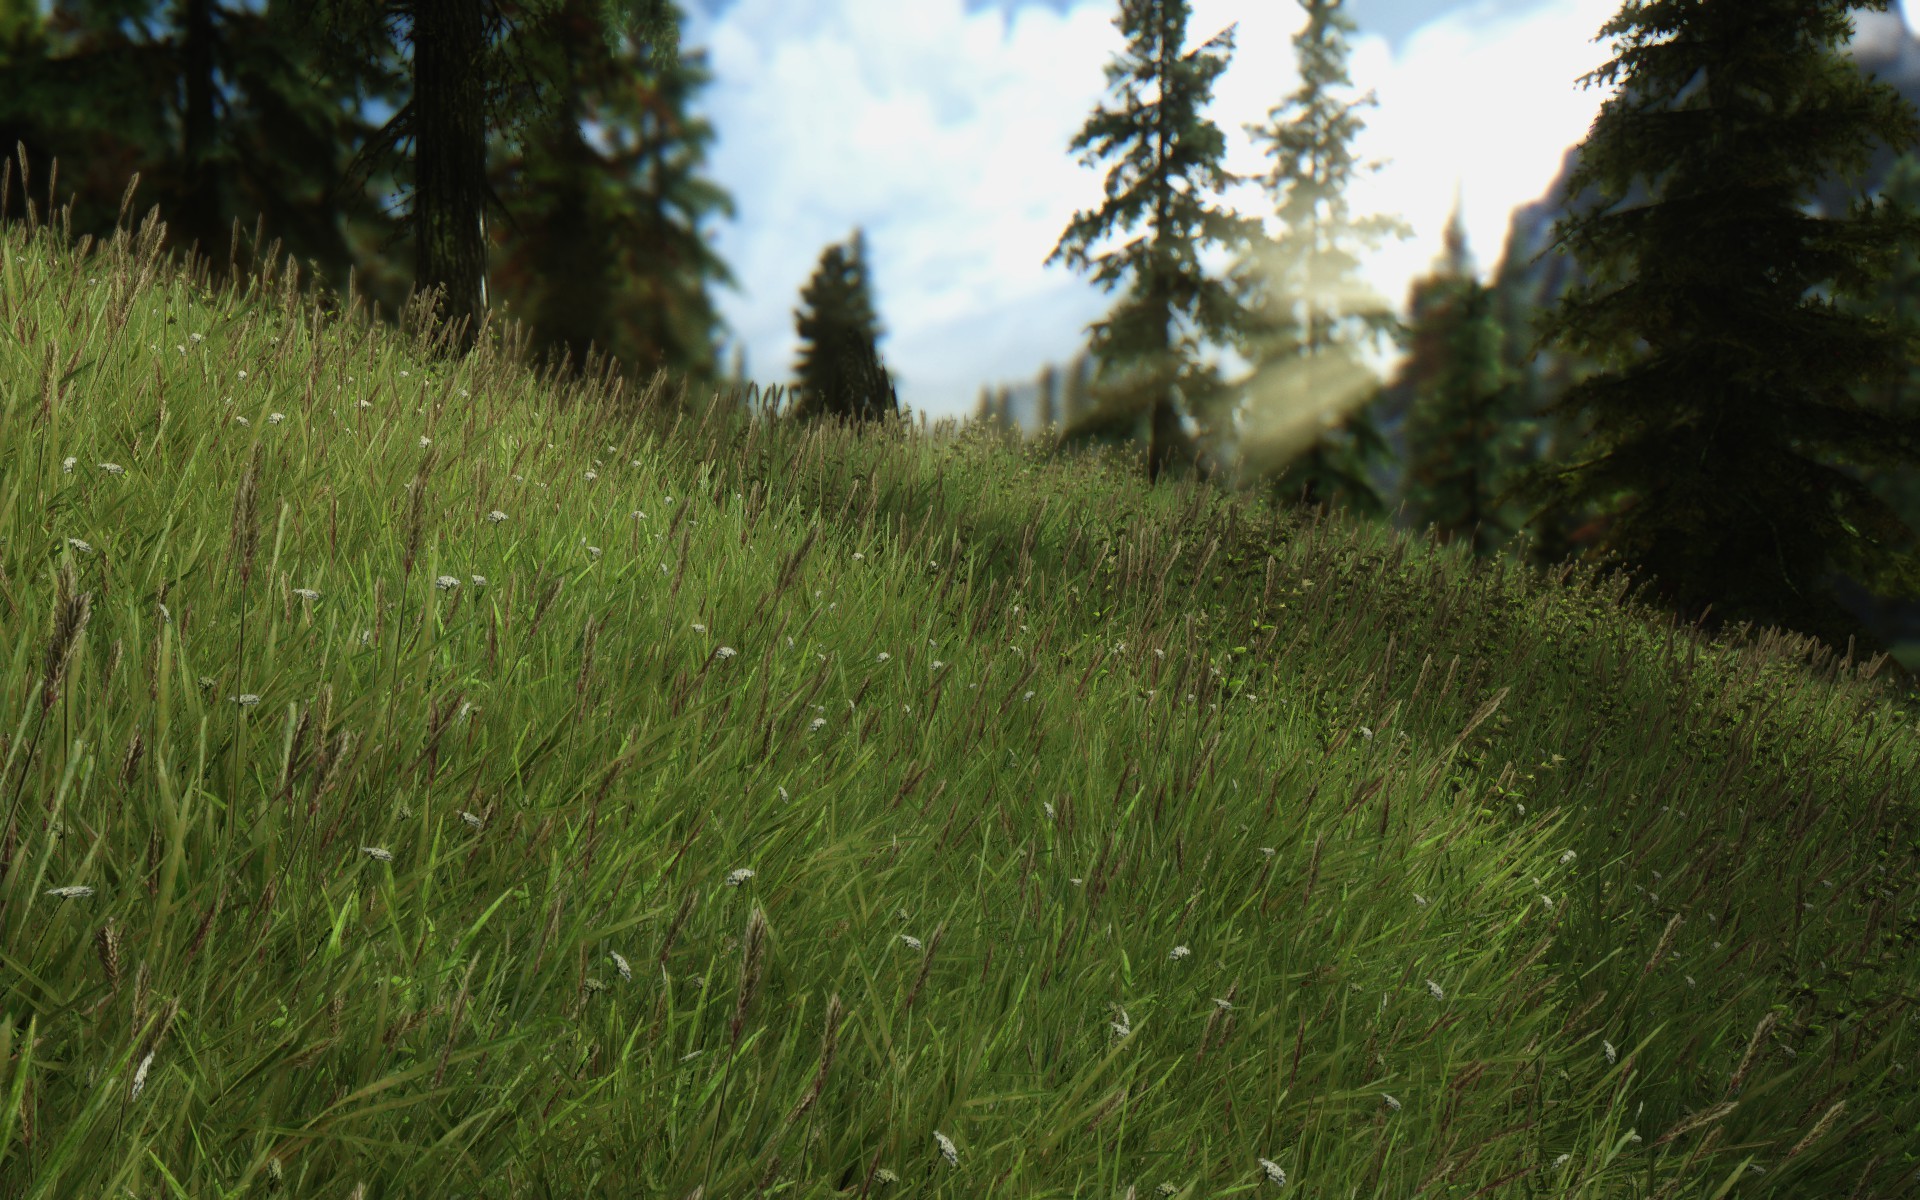 General 1920x1200 The Elder Scrolls V: Skyrim grass forest video games PC gaming screen shot